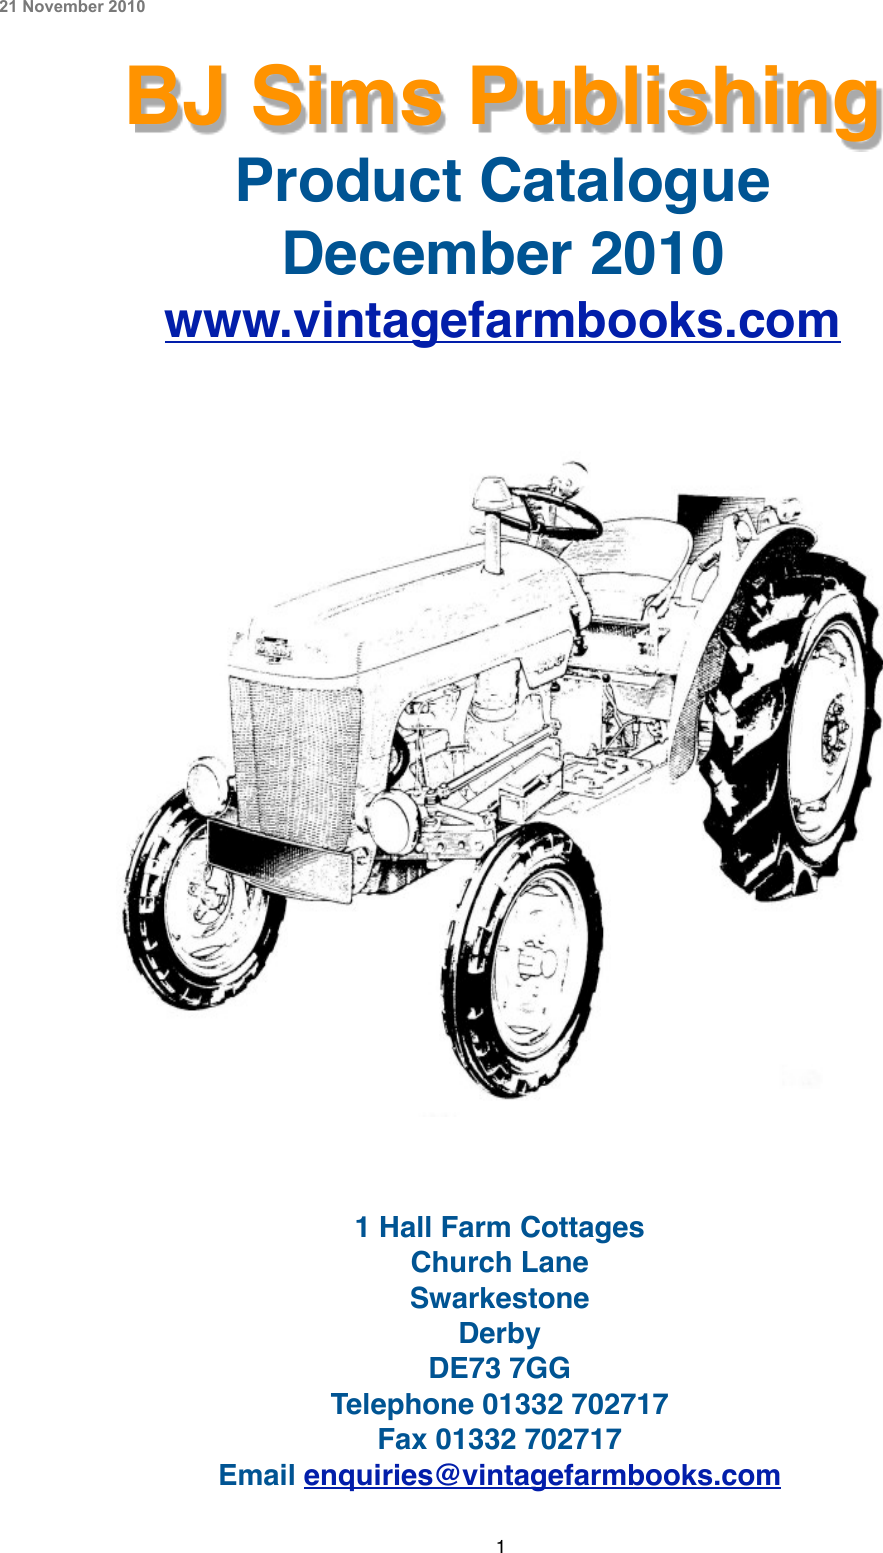 7045 Tractor Workshop Manual 6045 7011 Zetor 5011 Supplements 6011